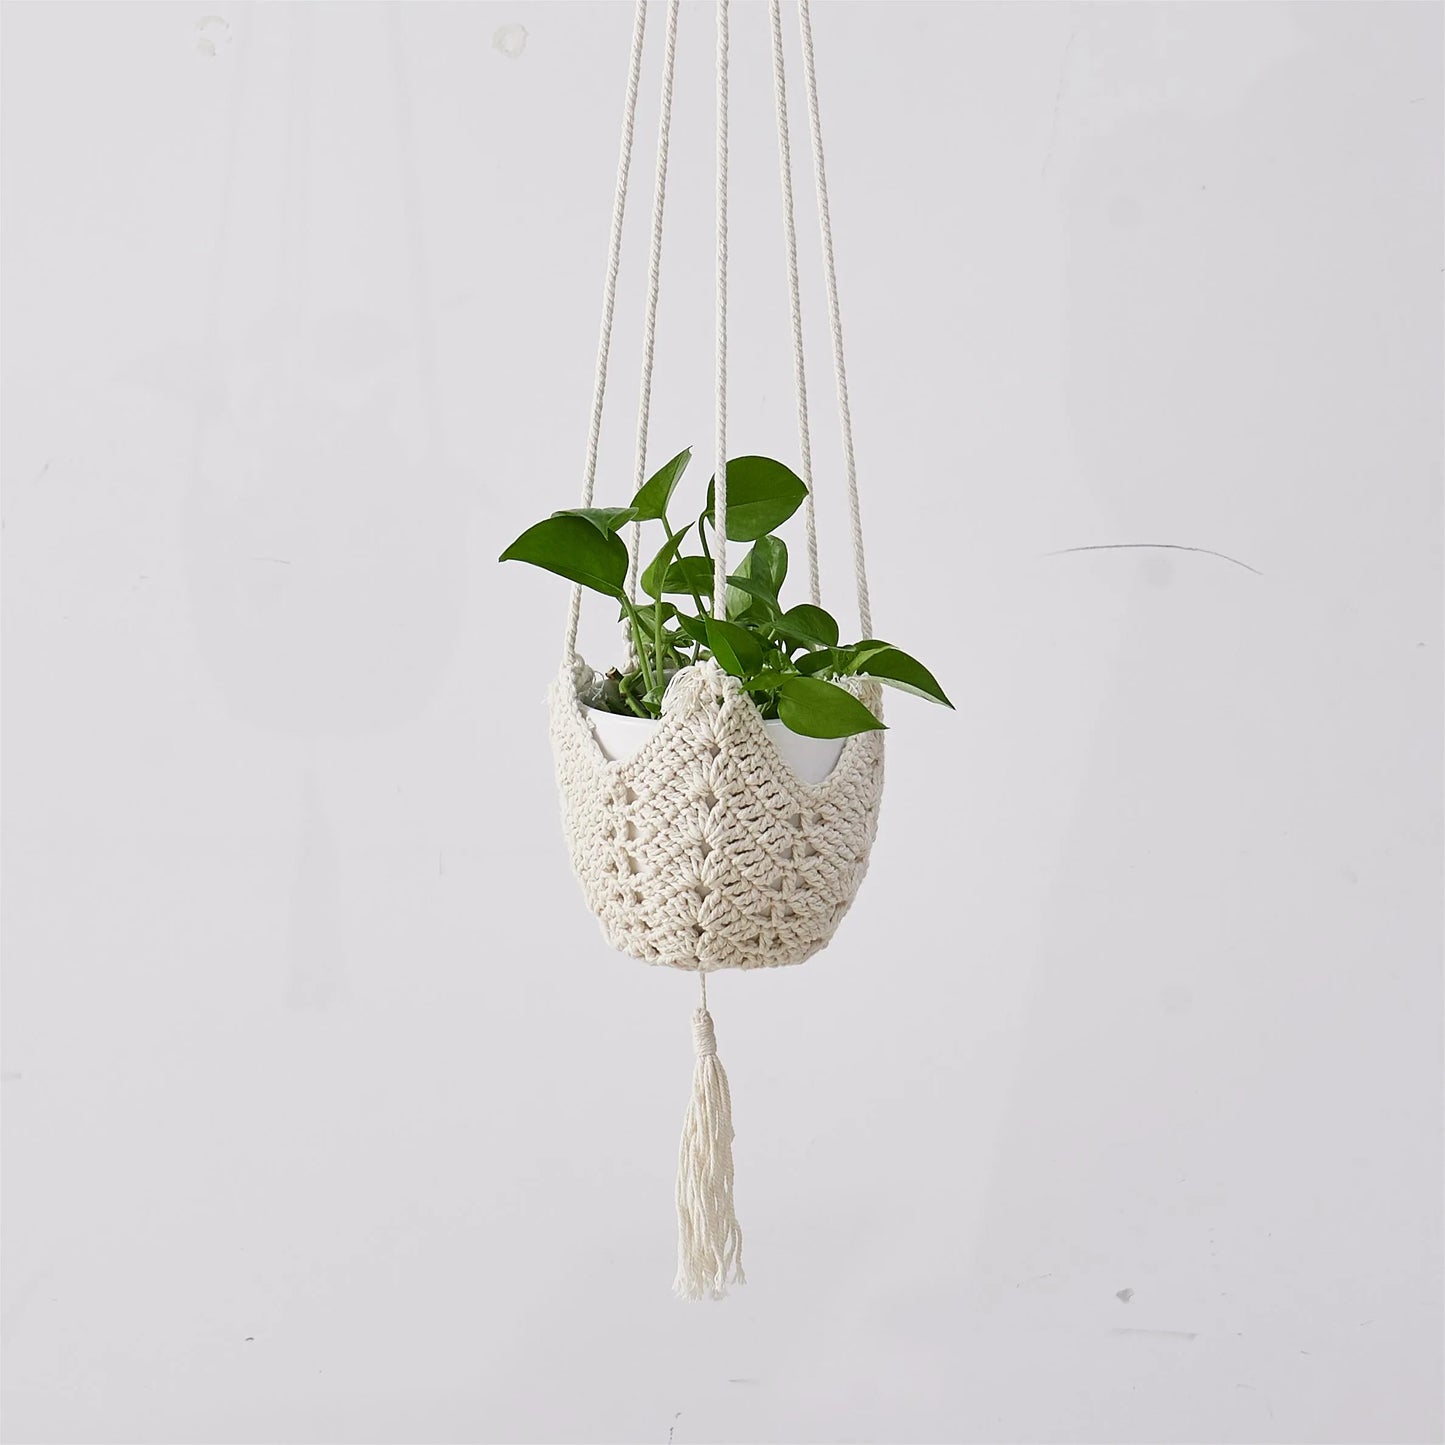 Macrame plant hanger handwoven hemp rope artist design gardening